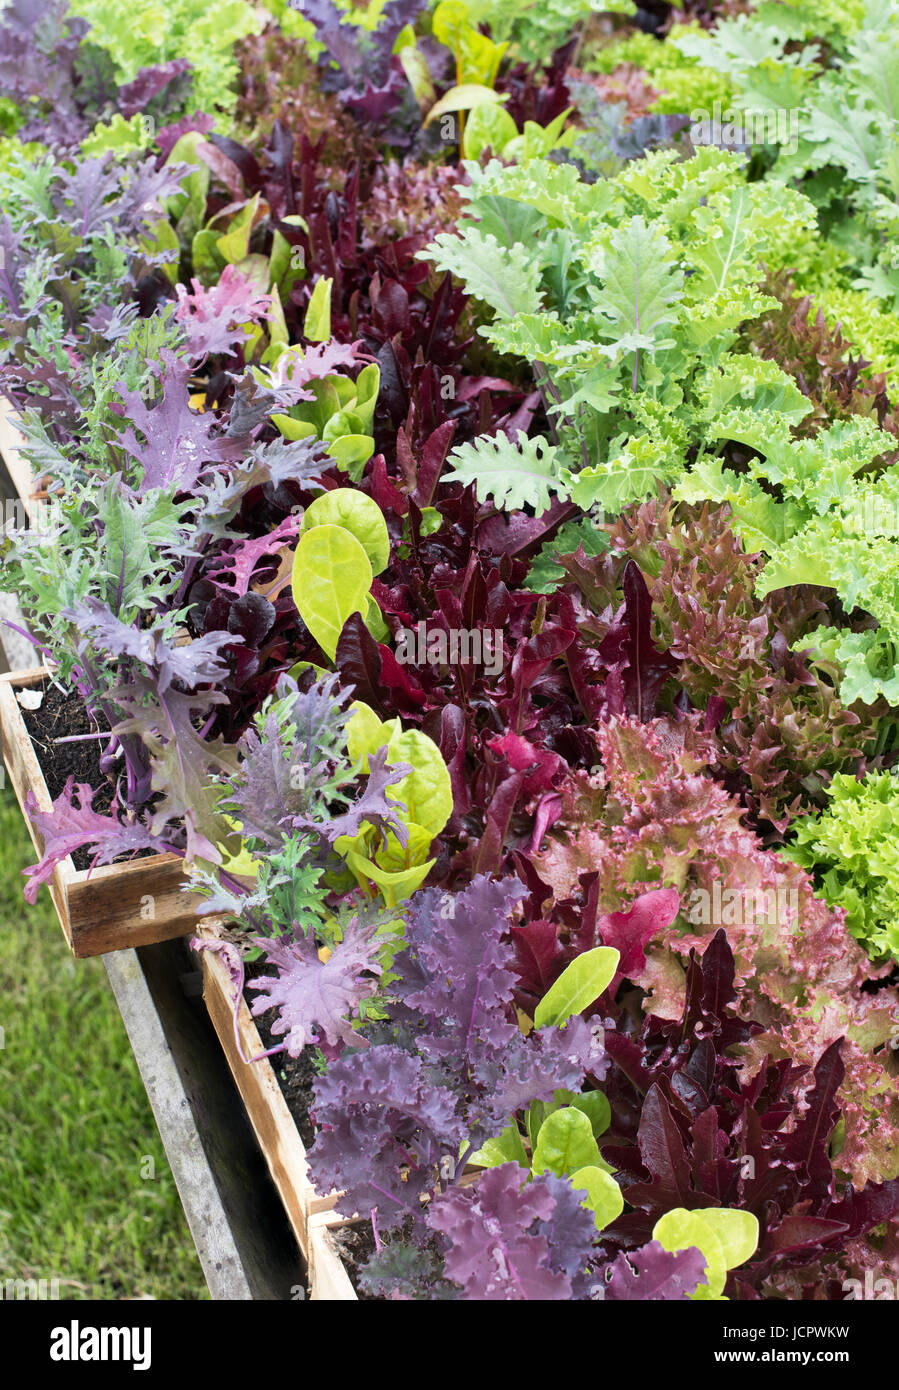 Wooden trays of fresh salad plants. UK Stock Photo